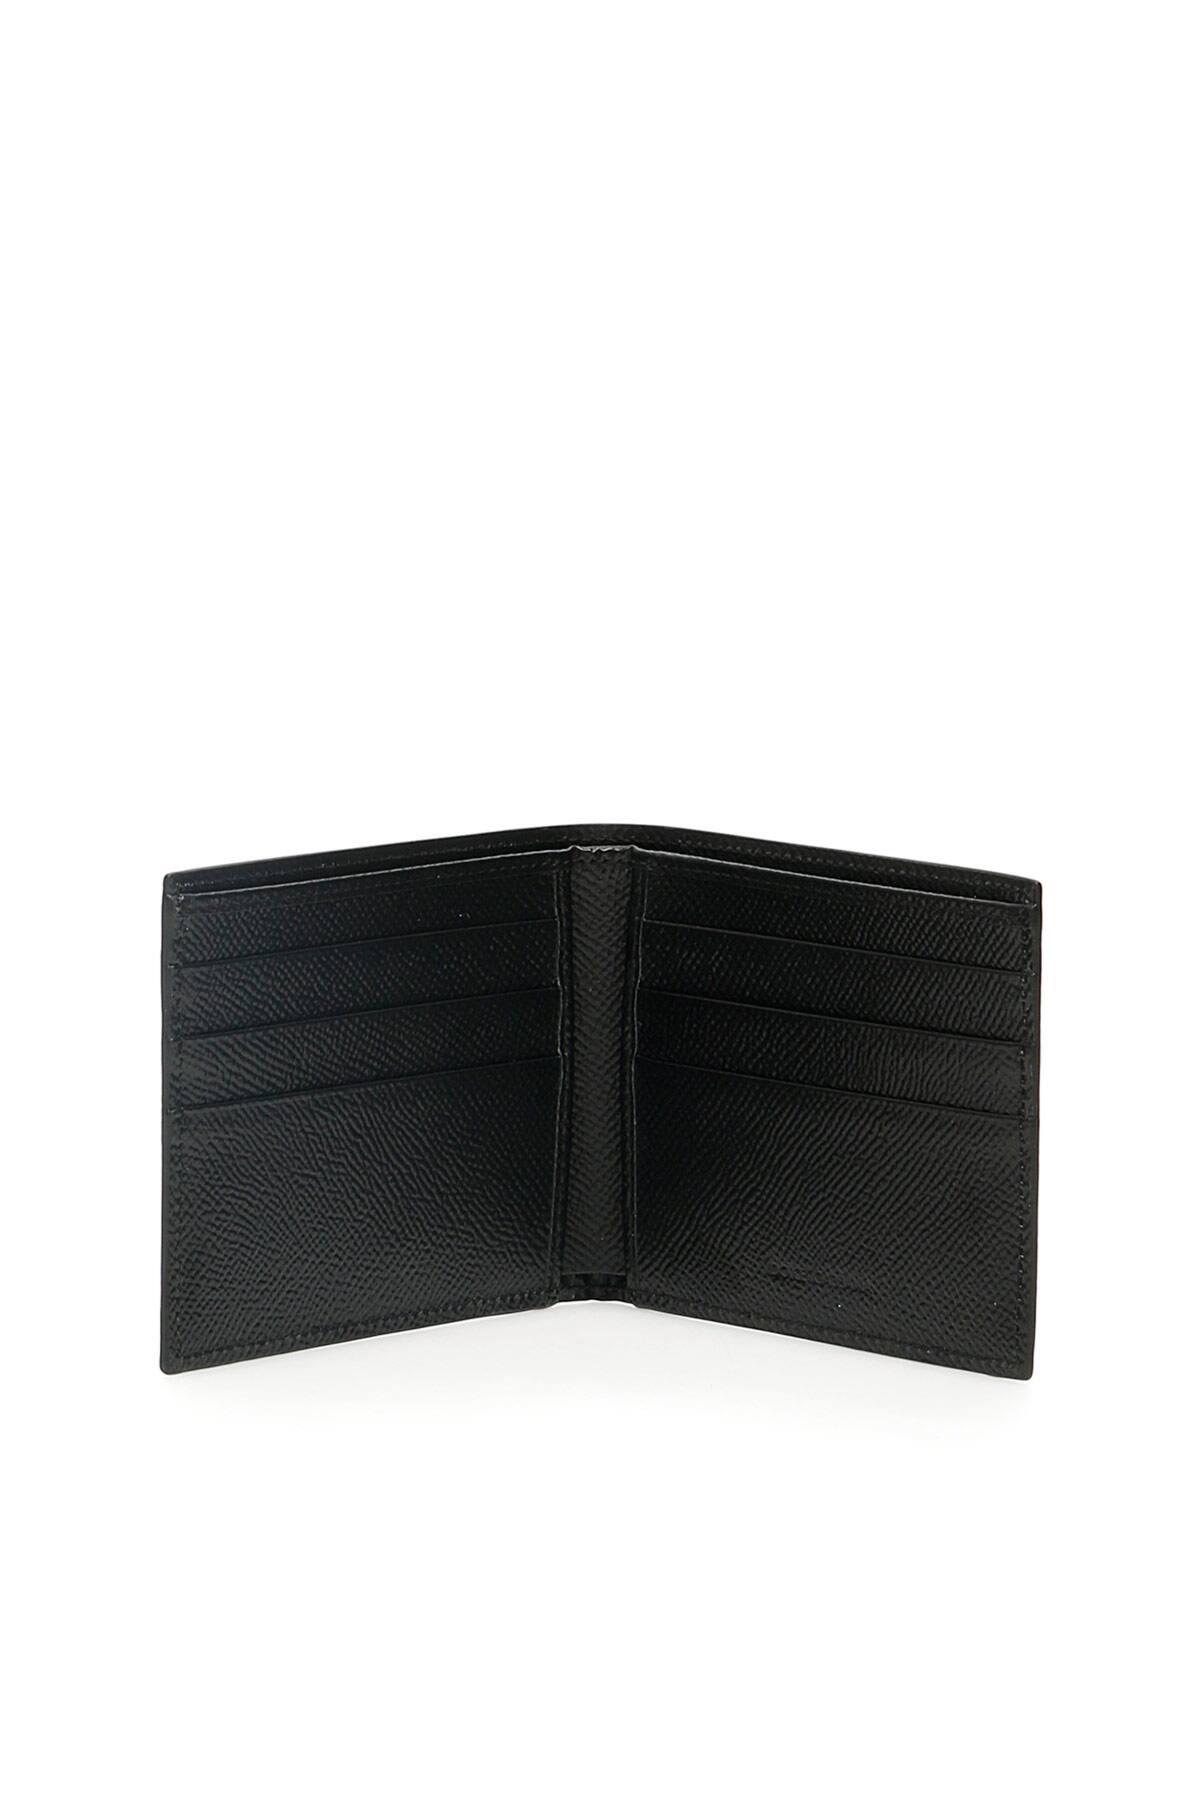 Dolce & Gabbana Leather Branded Bifold Wallet in Black for Men - Save ...